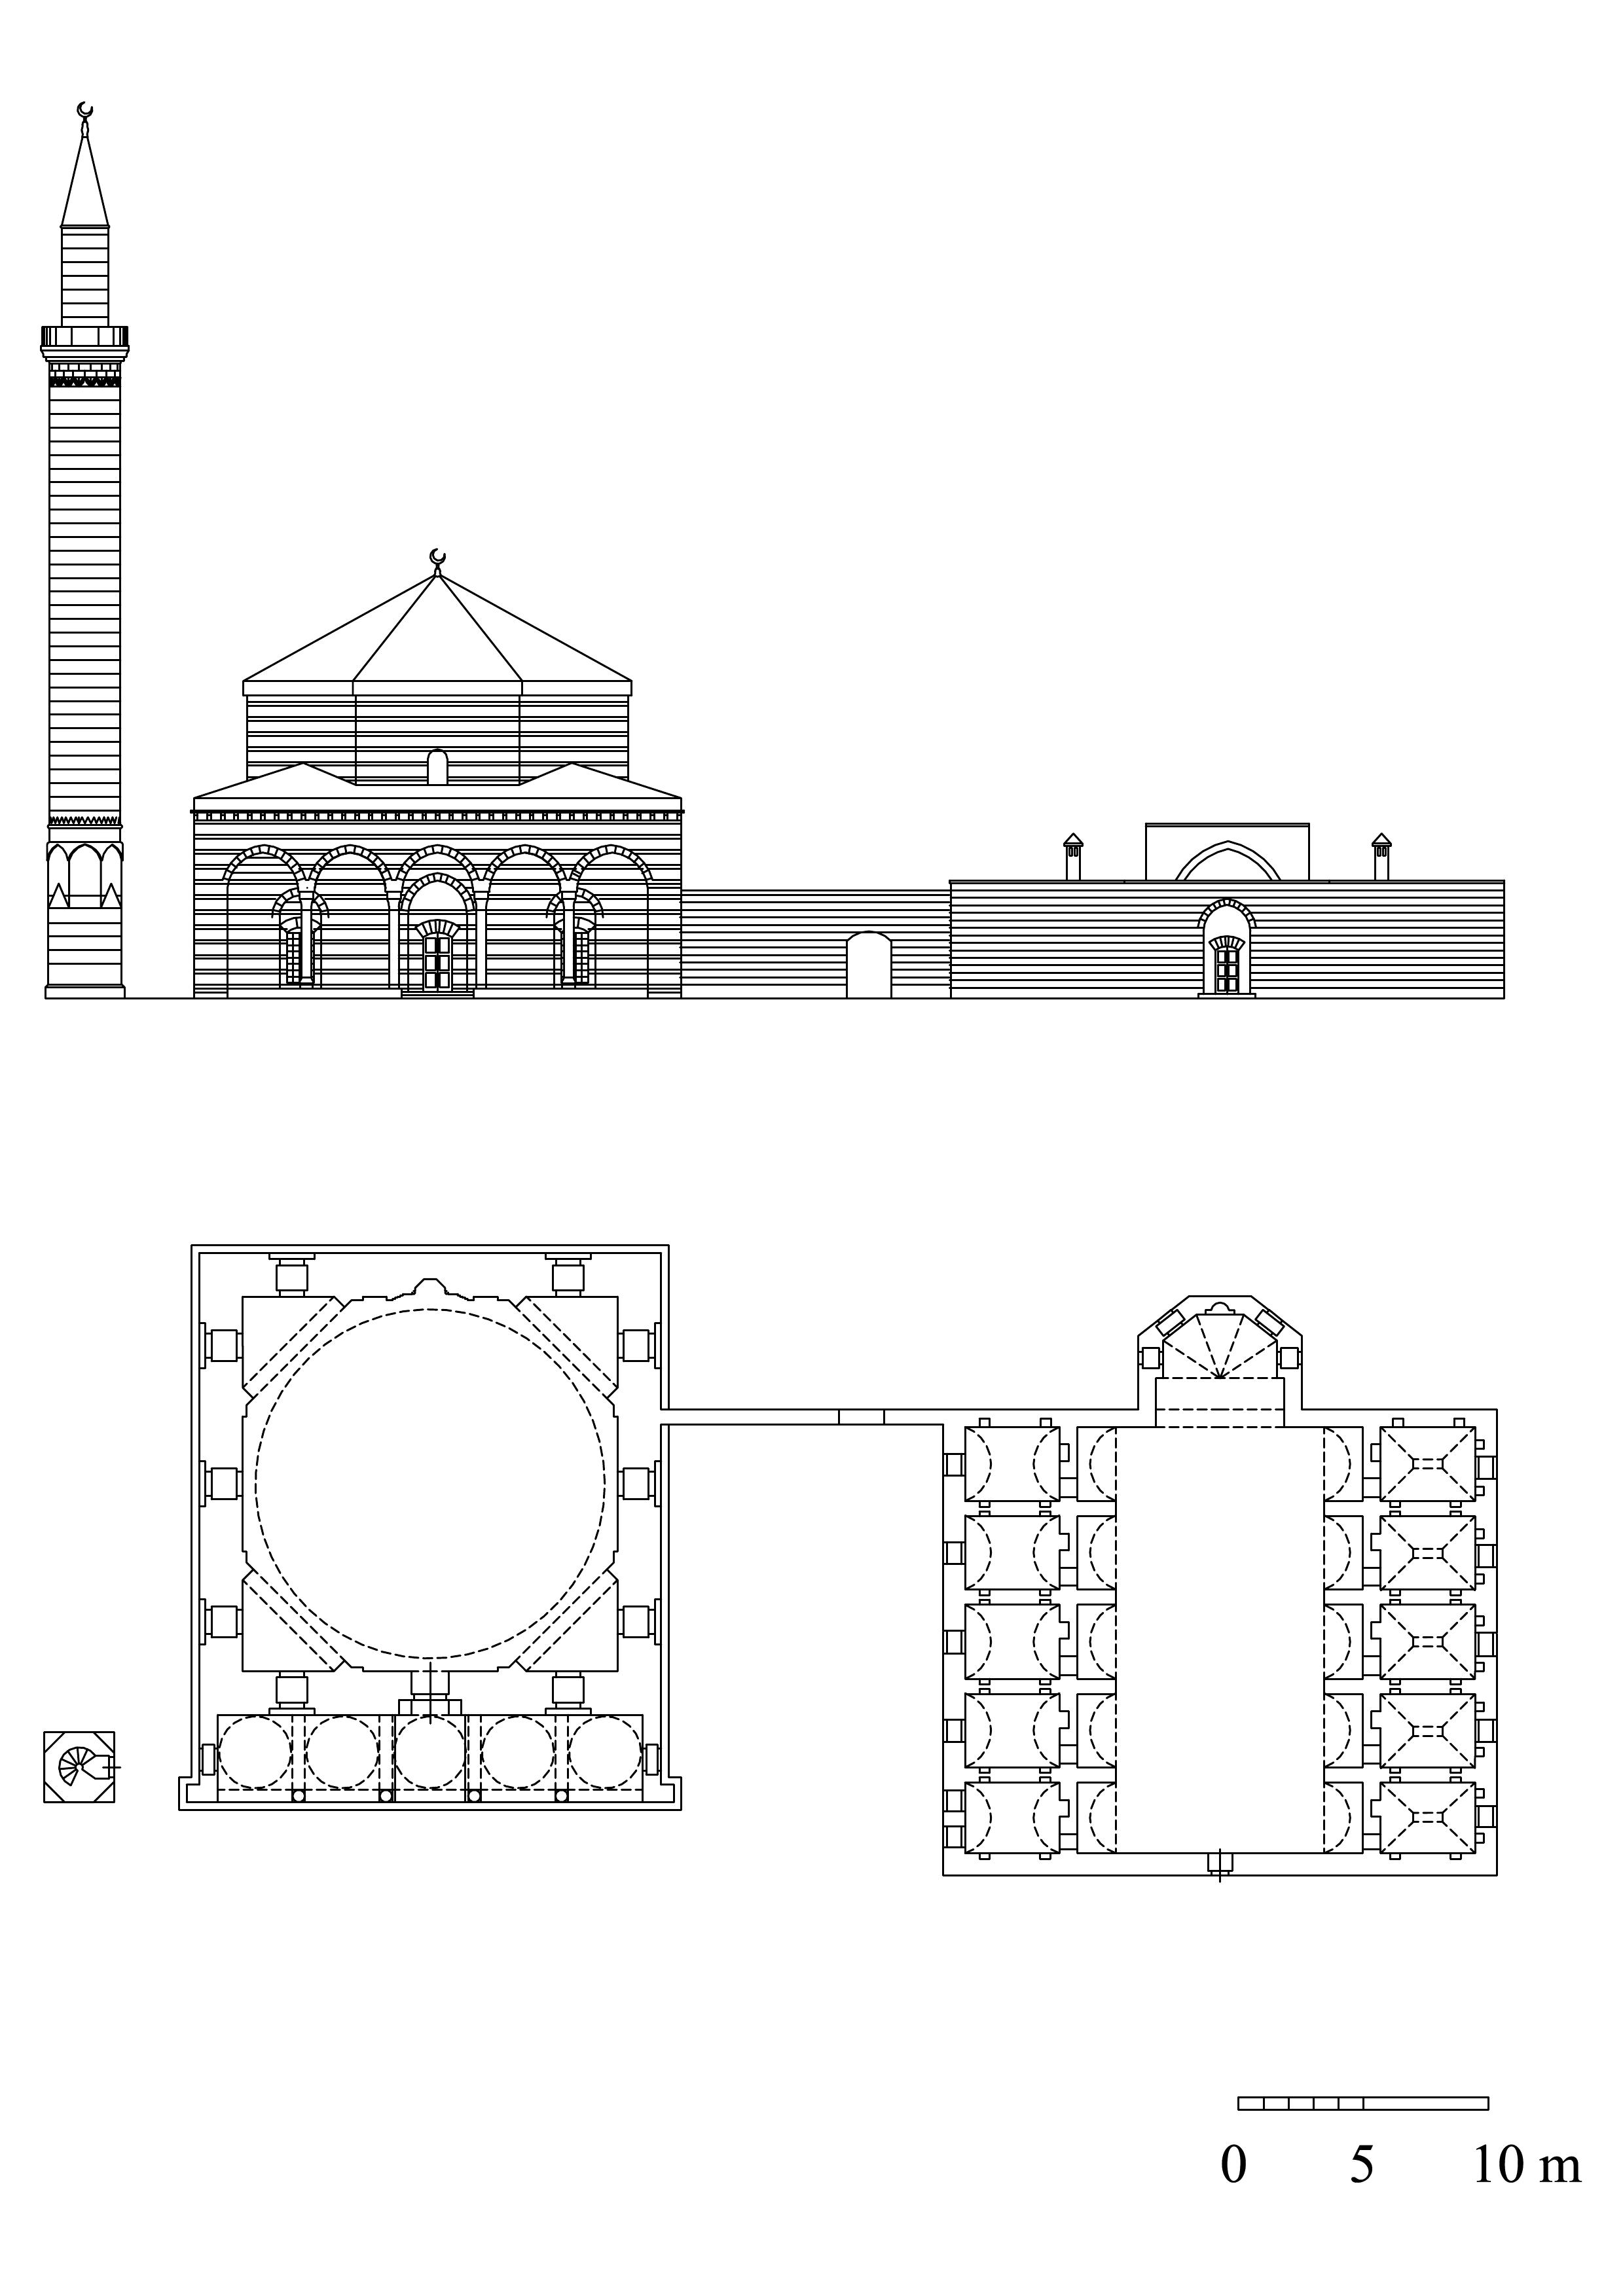 Floor plan and elevation of Hadim Ali Pasa Complex